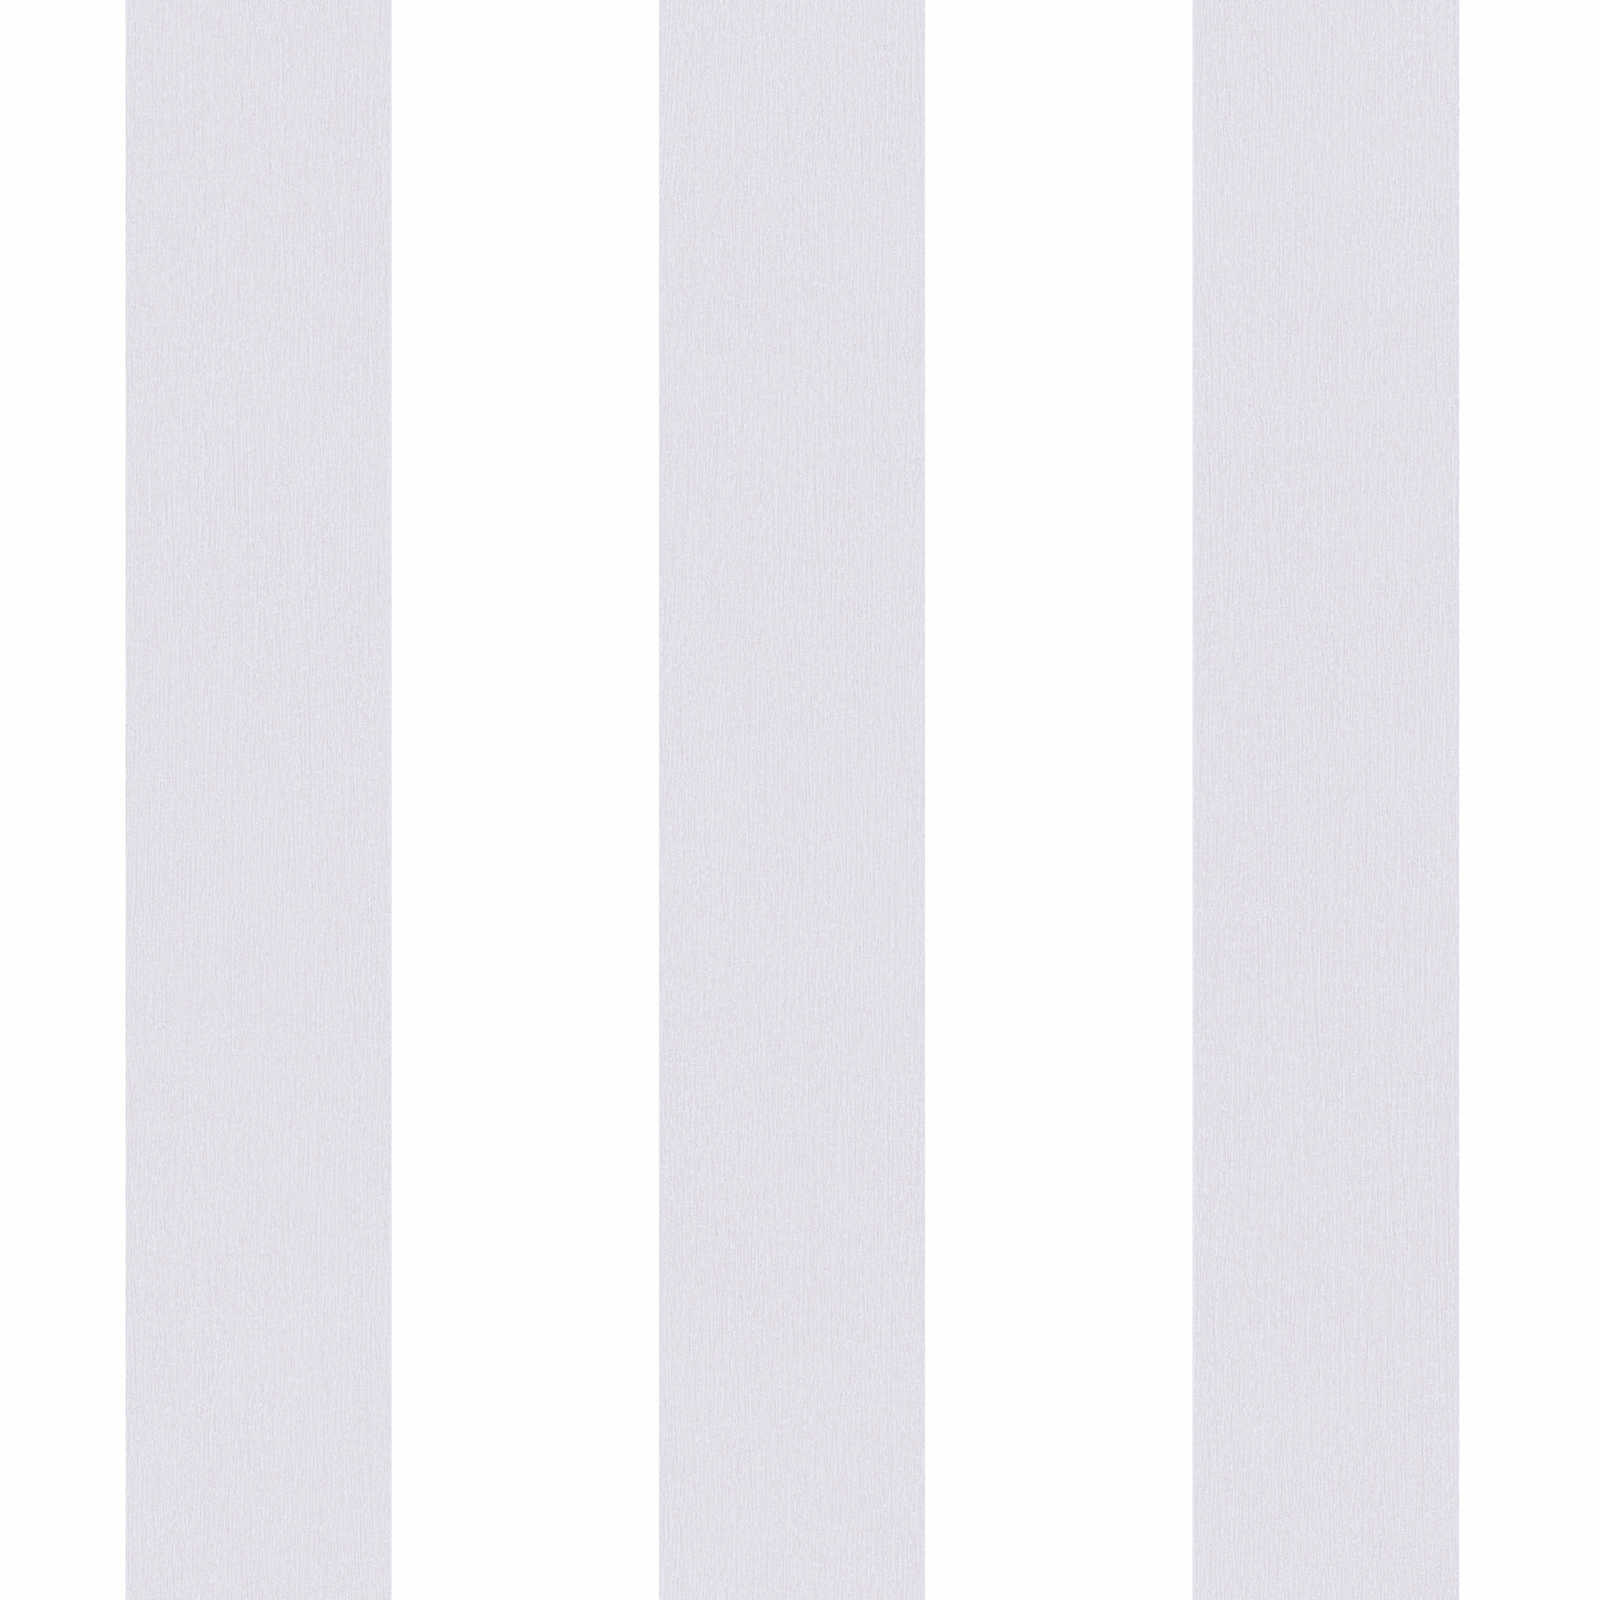 Kinderkamer behang verticale strepen - grijs, wit
